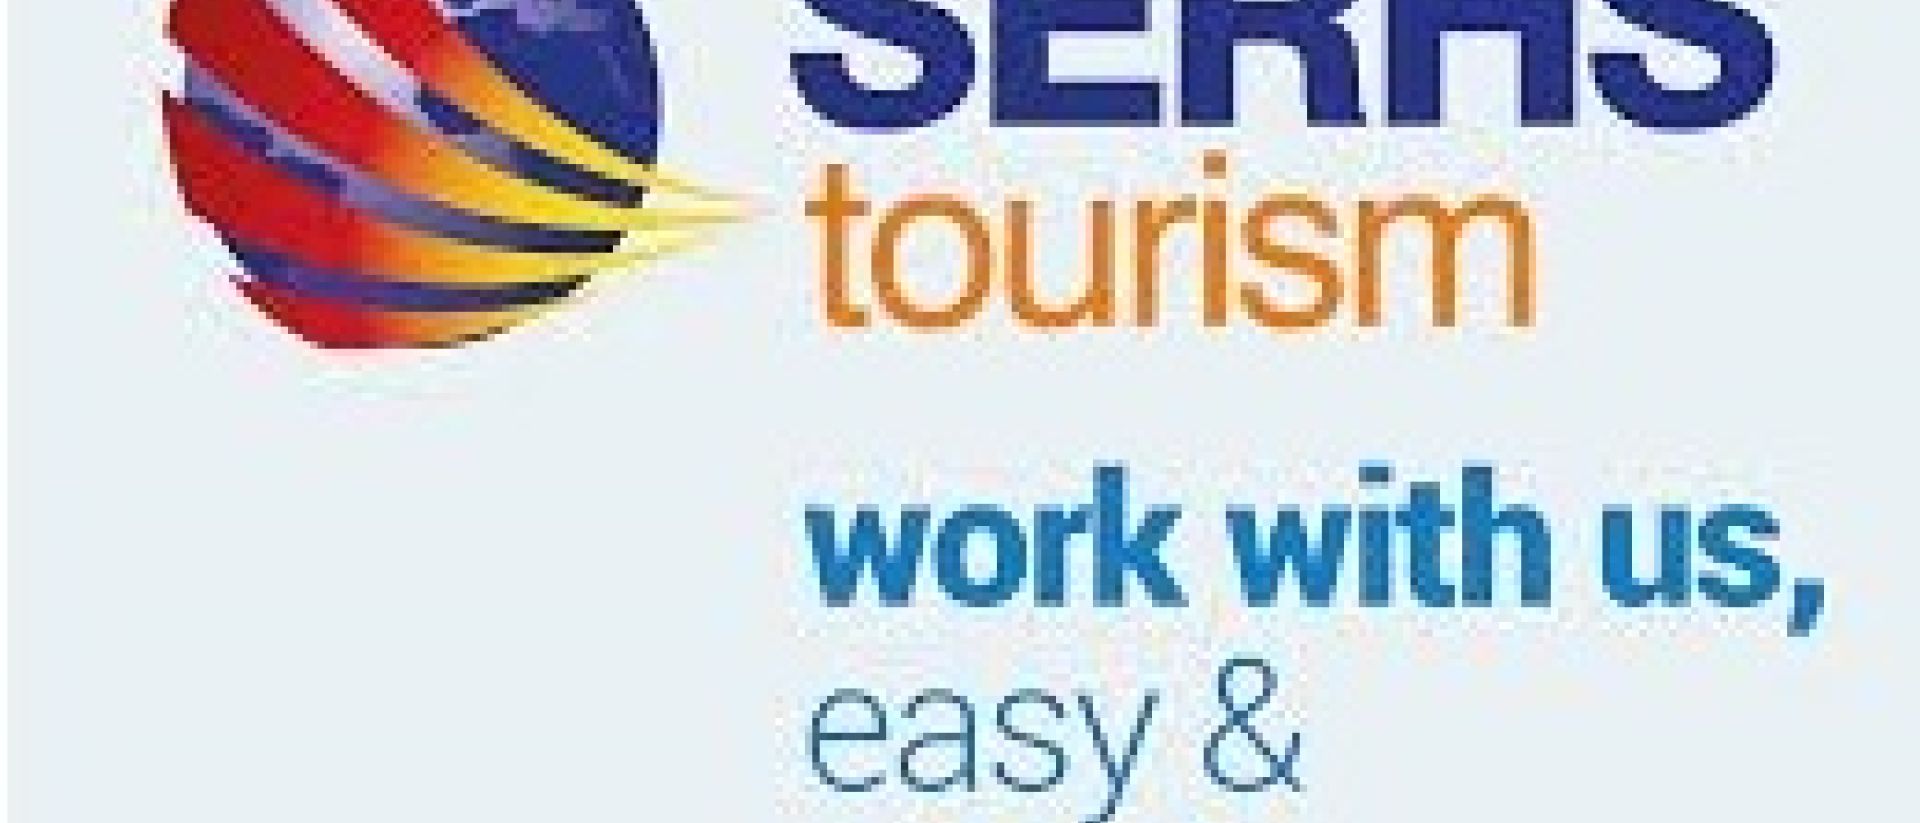 serhs tourism portugal